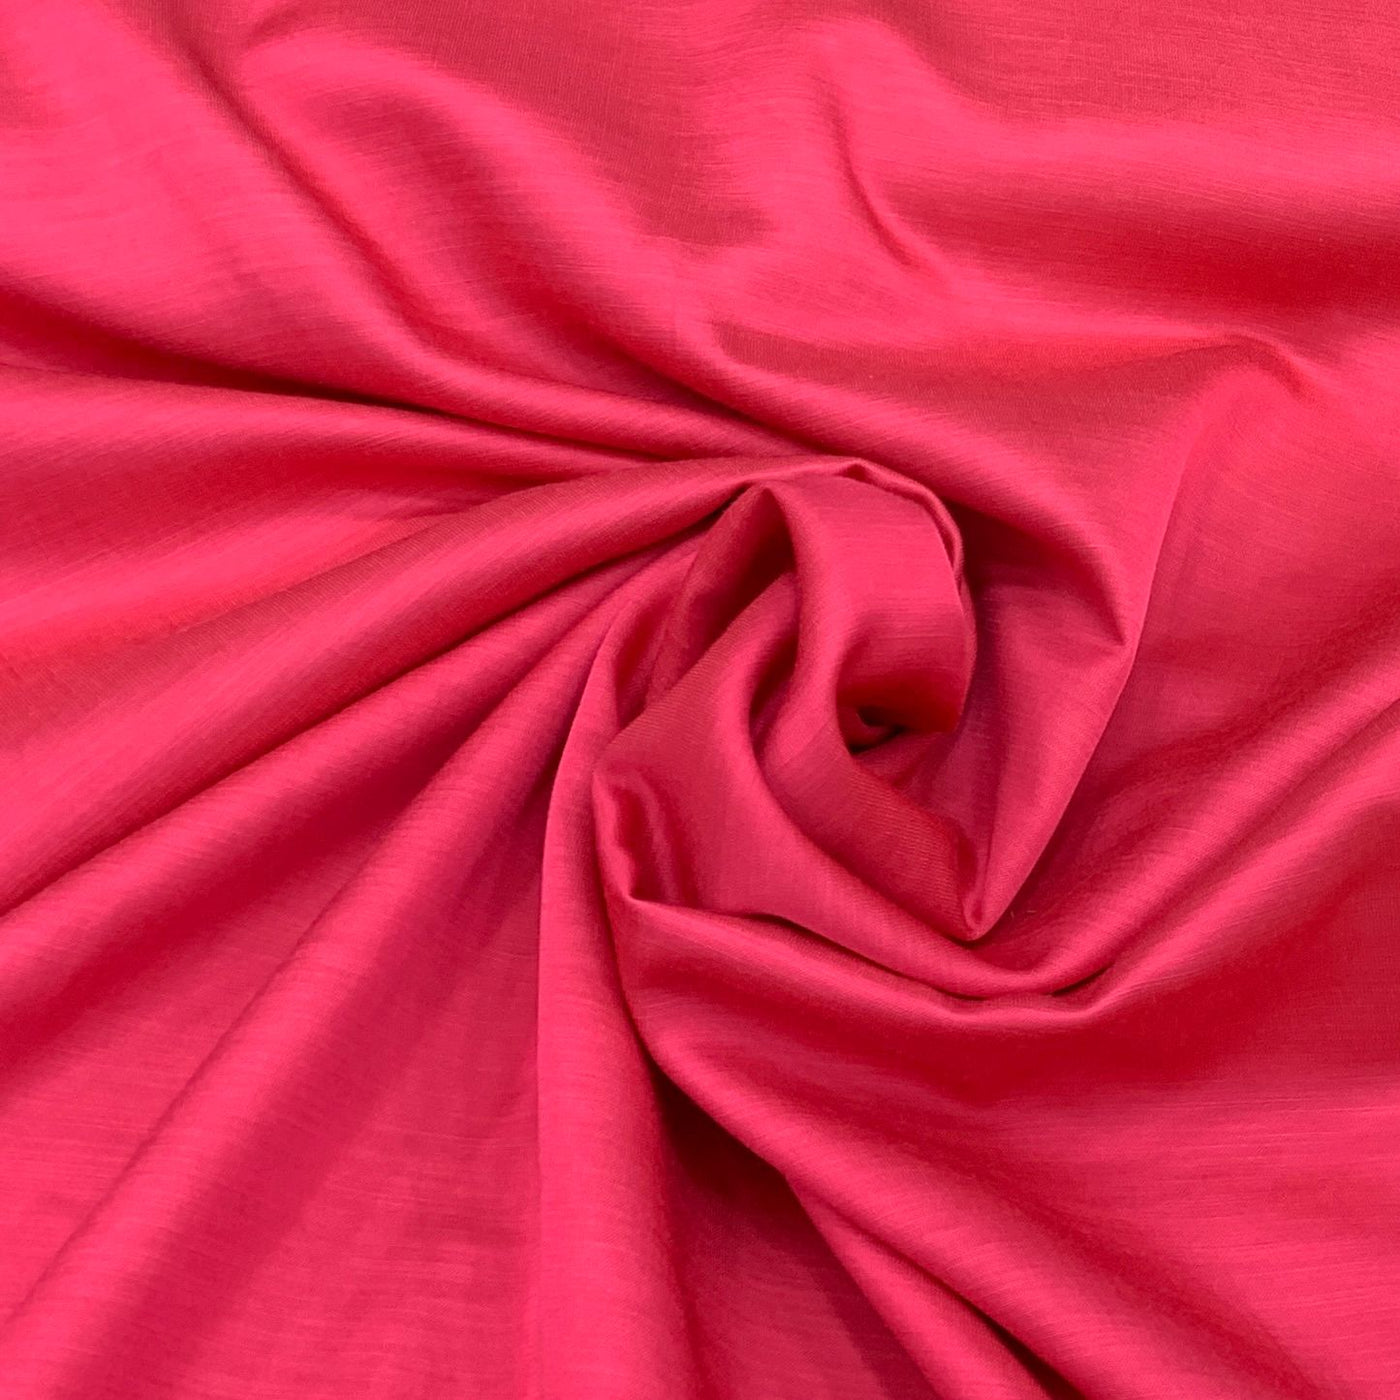 Carrot Pink Plain Satin Linen Fabric